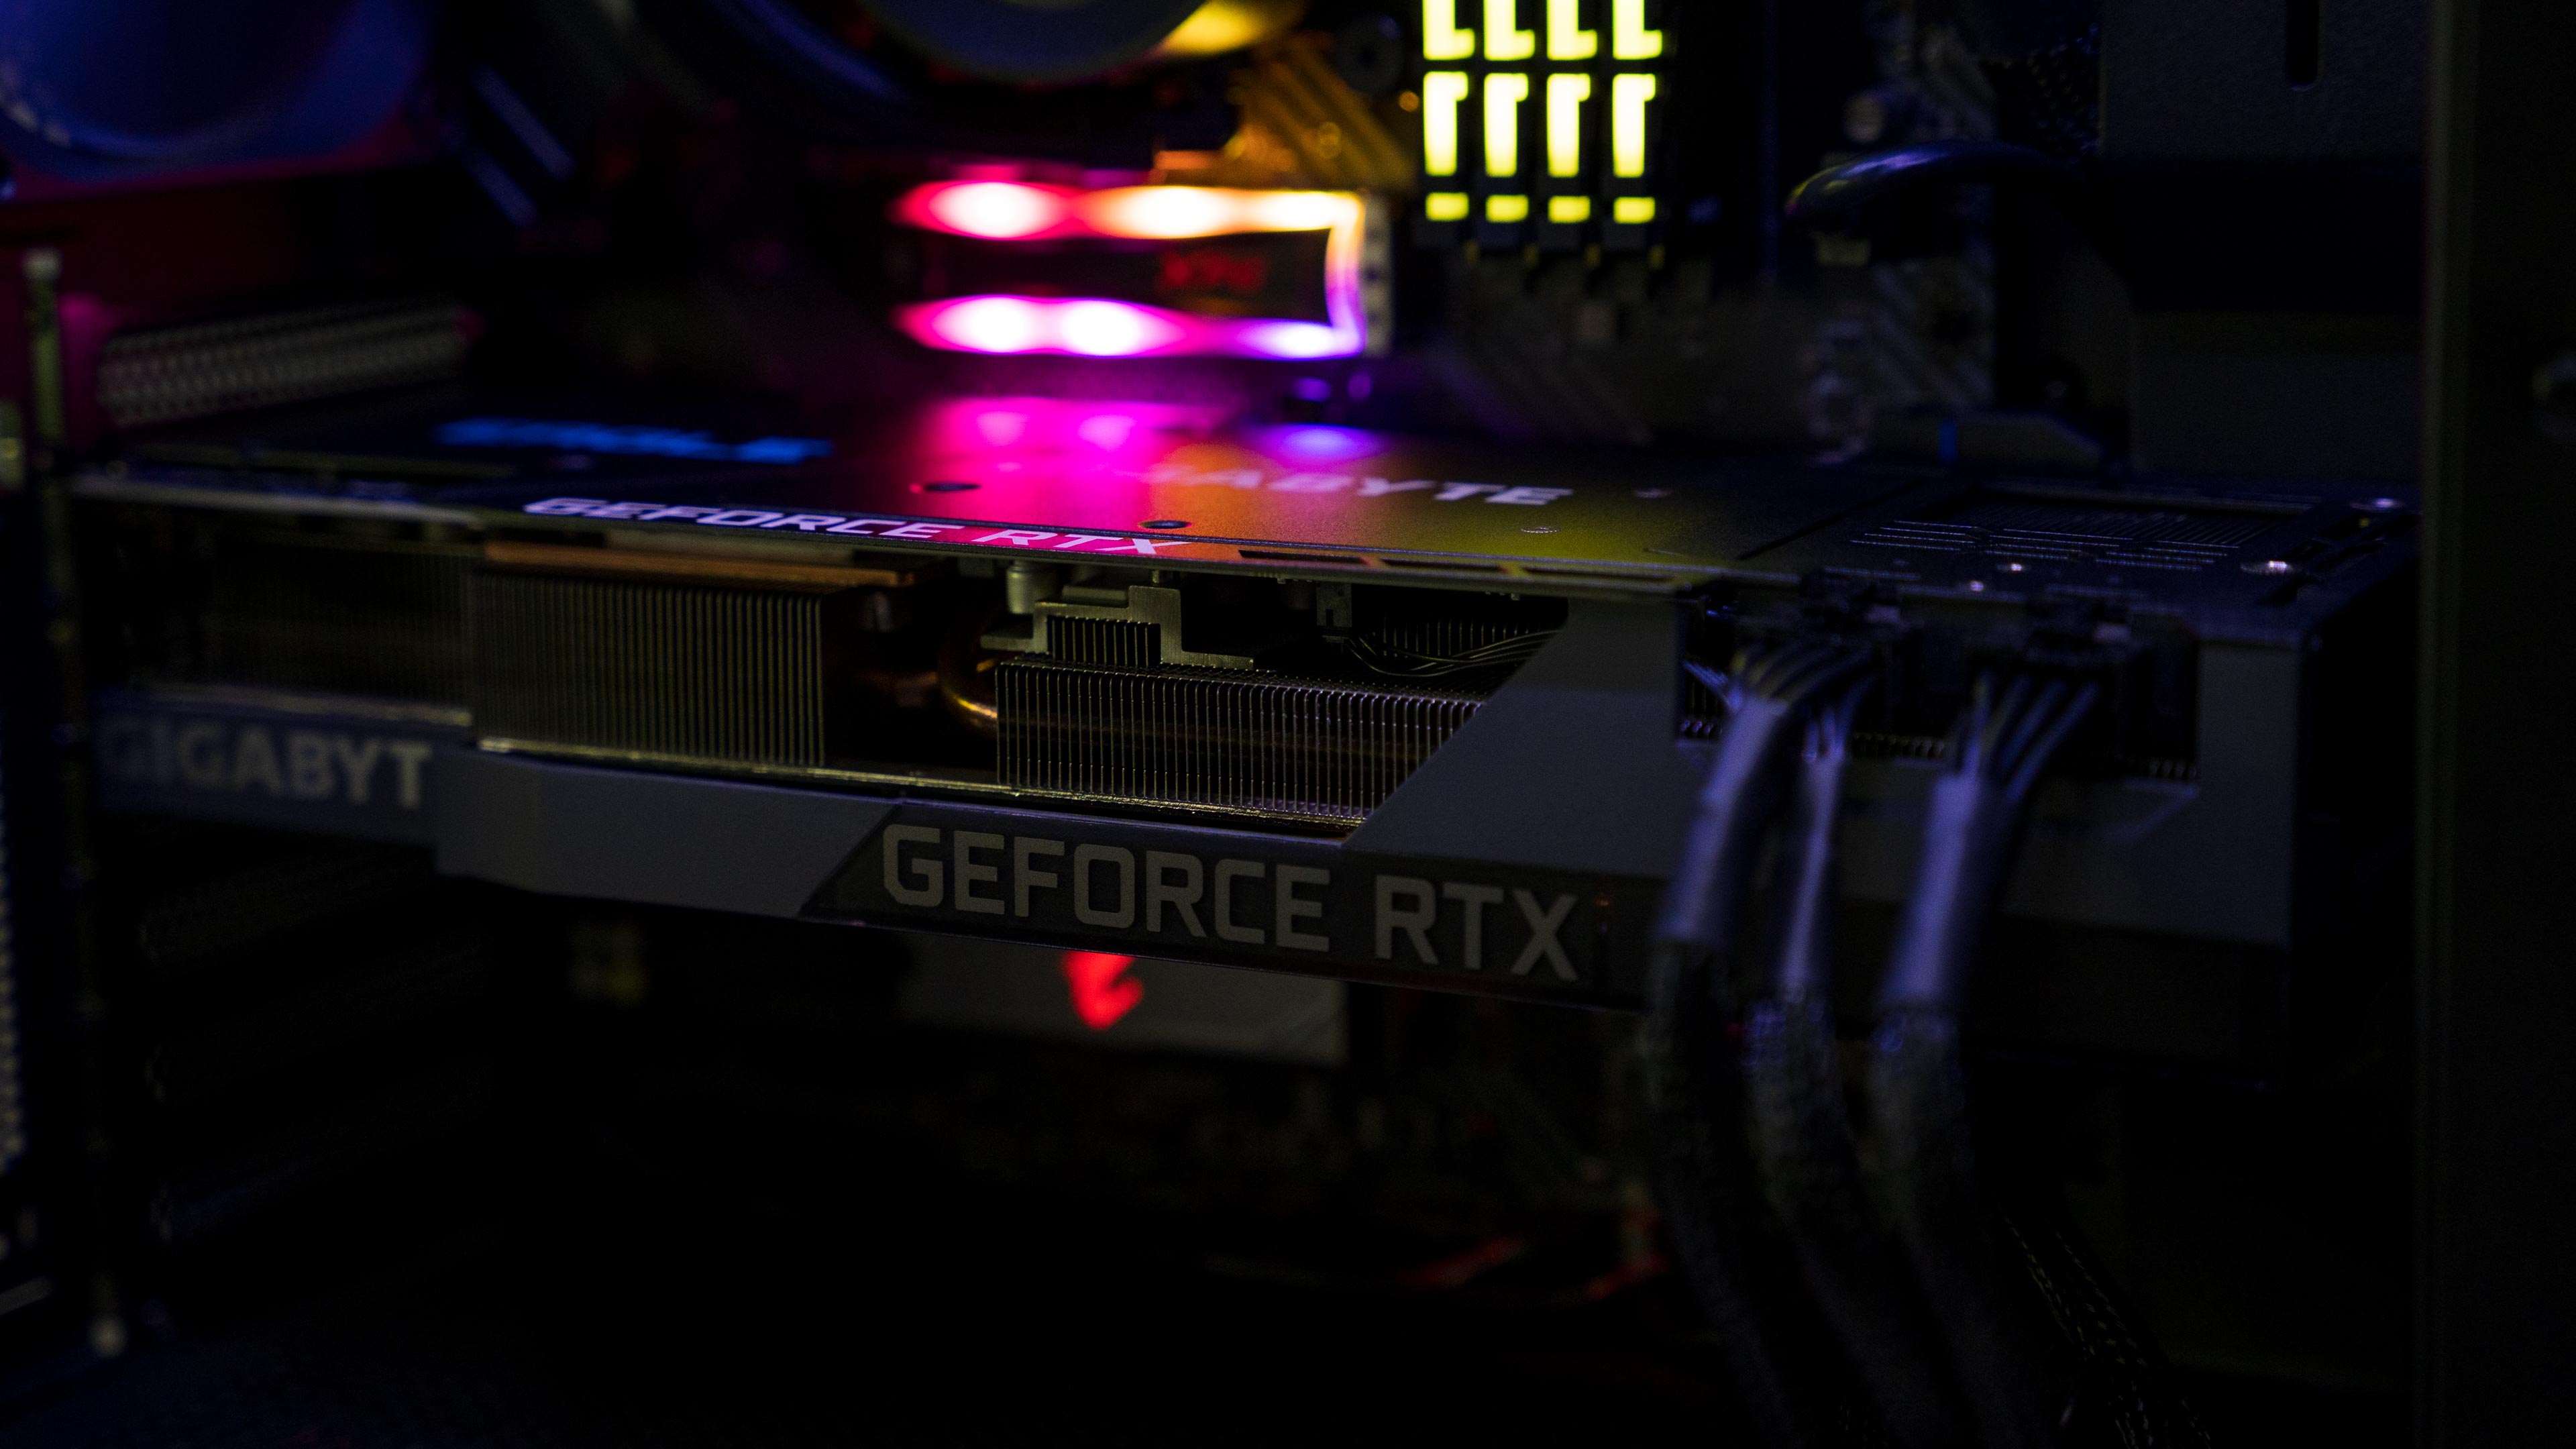 Gigabyte RTX 3080 Gaming PC 2021 (14)